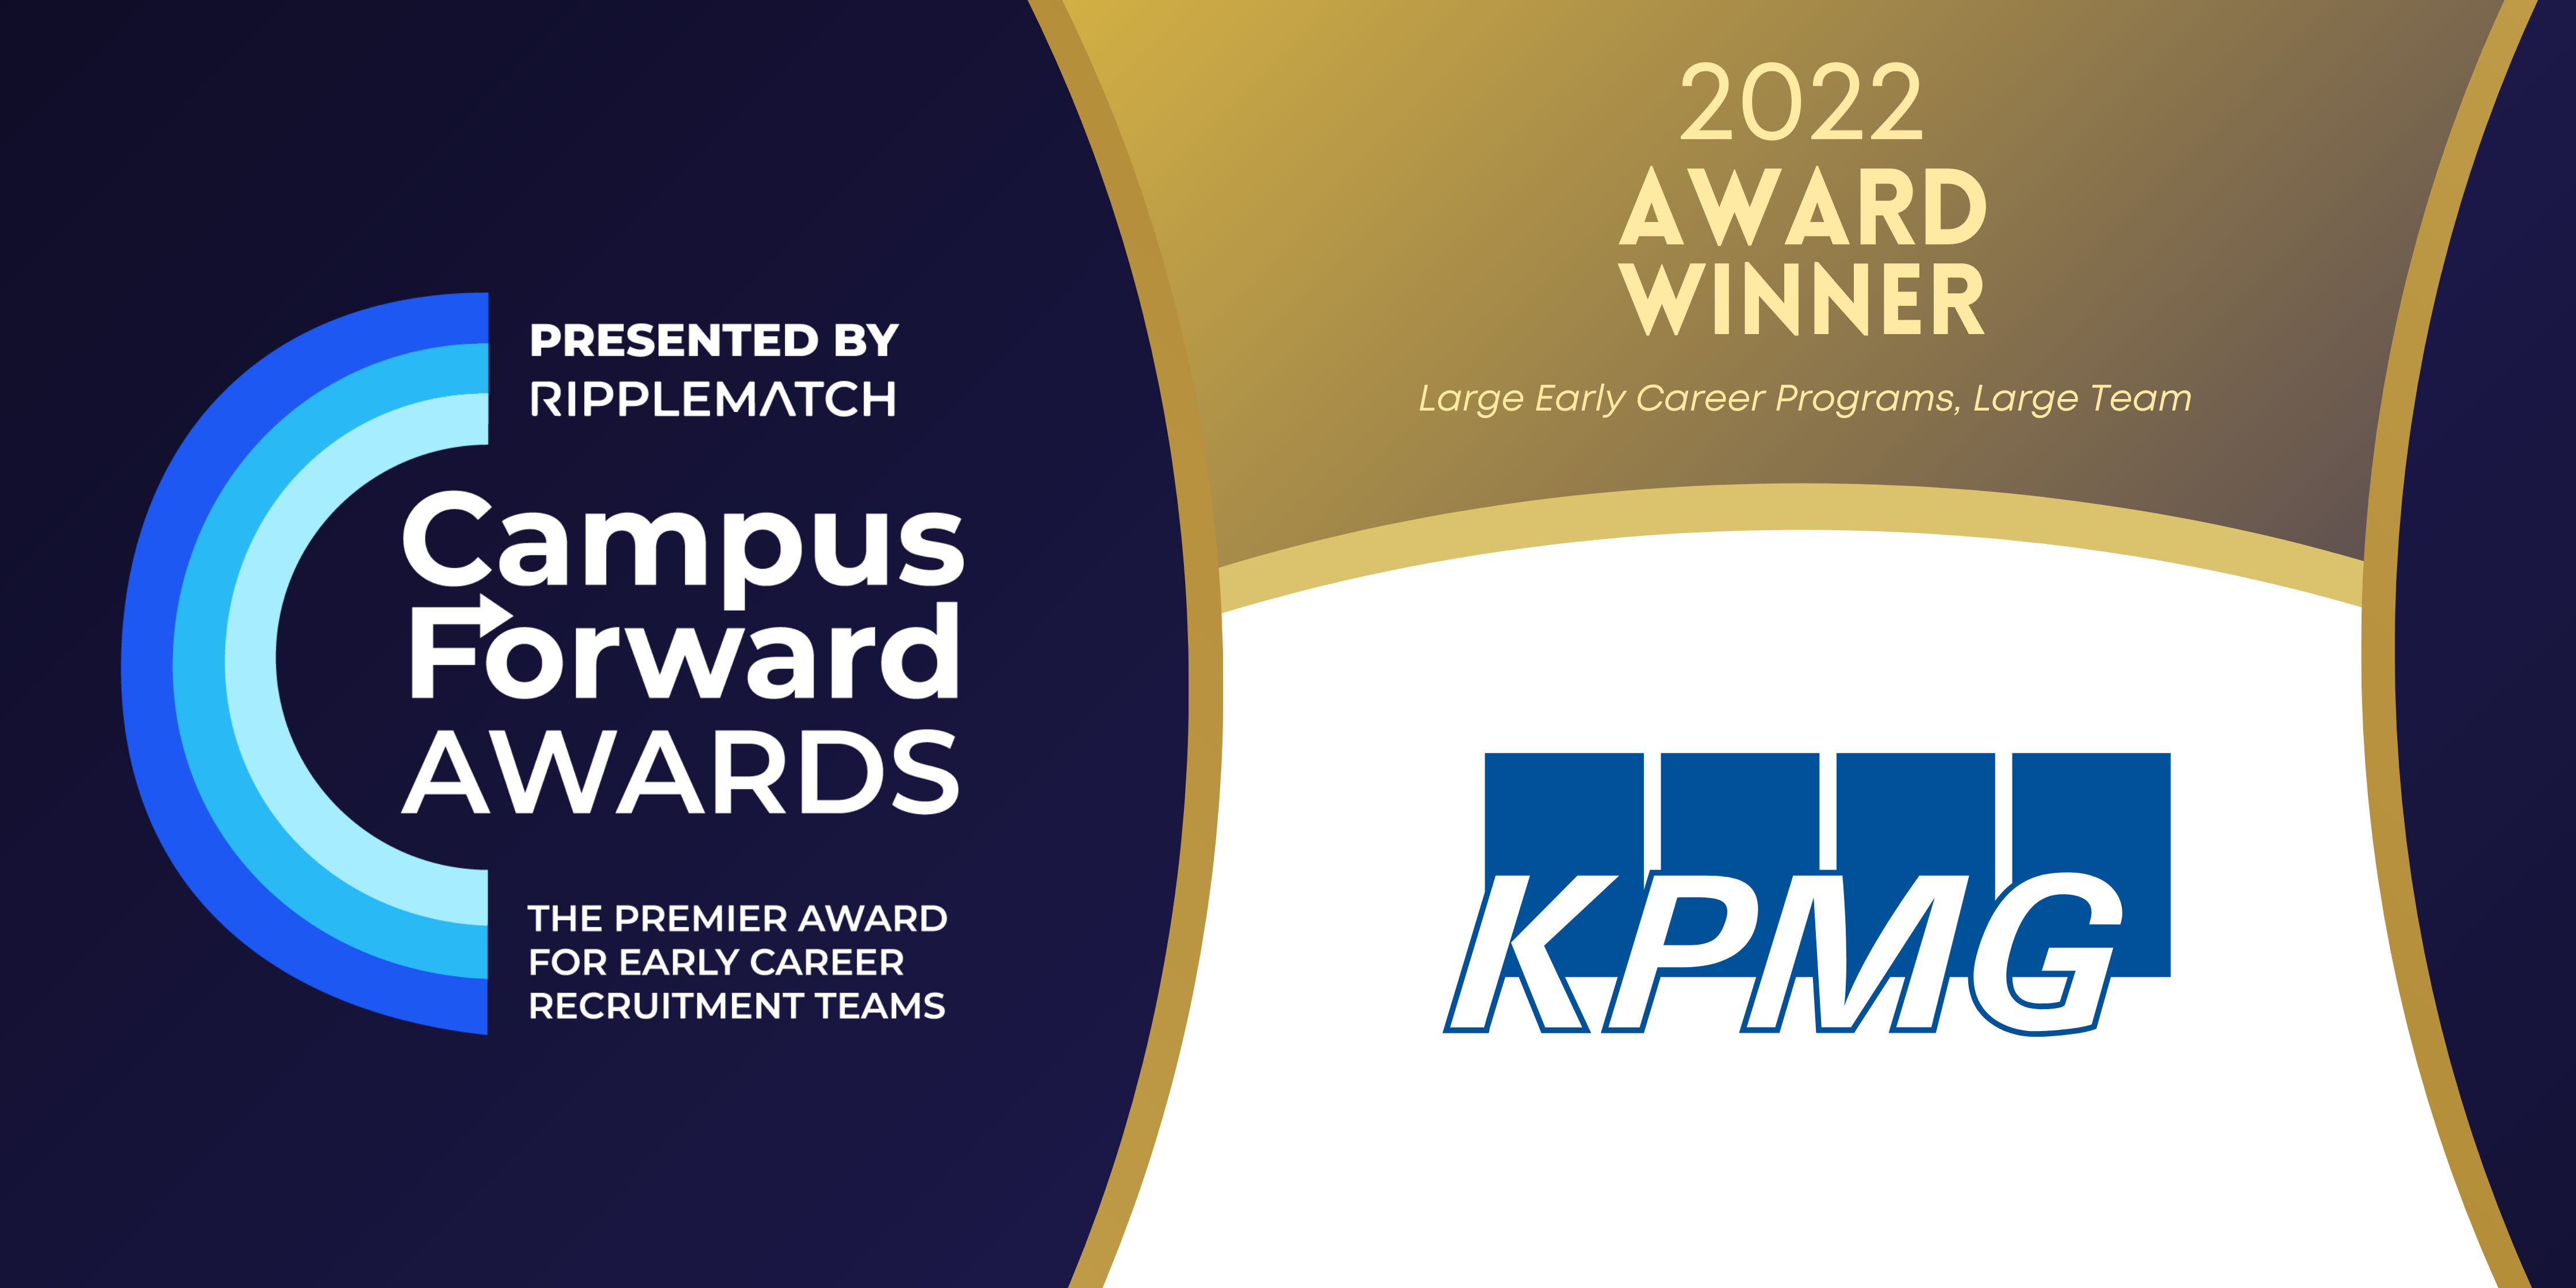 KPMG, LLP is a Campus Forward Award Winner 2022